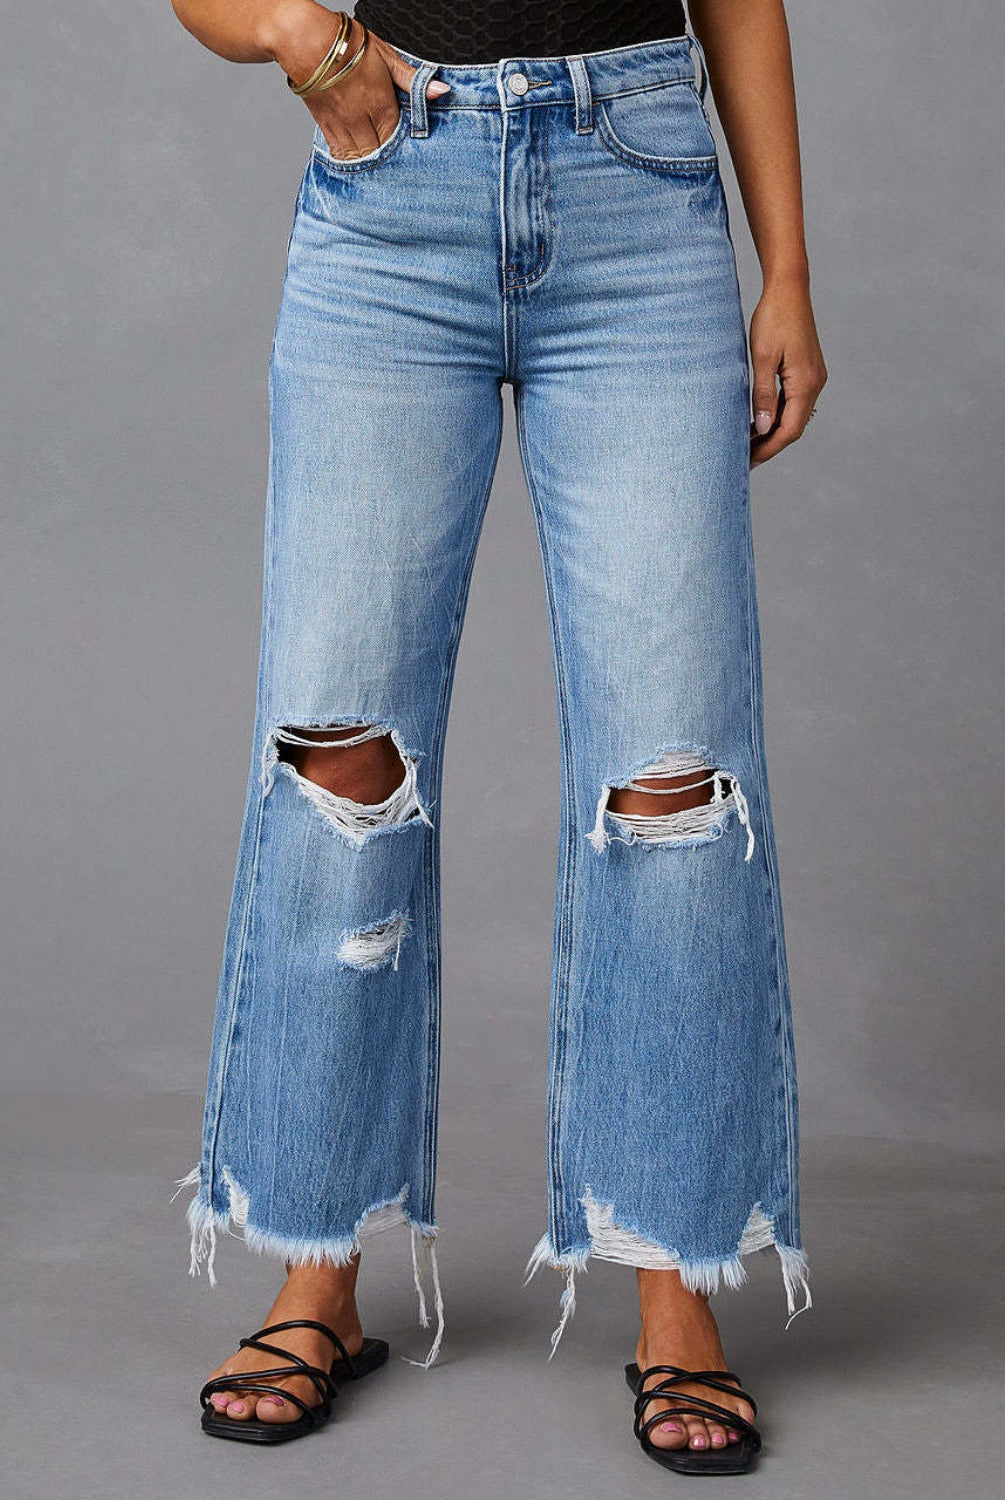 Distressed Raw Hem Jeans with Pockets - GemThreads Boutique Distressed Raw Hem Jeans with Pockets